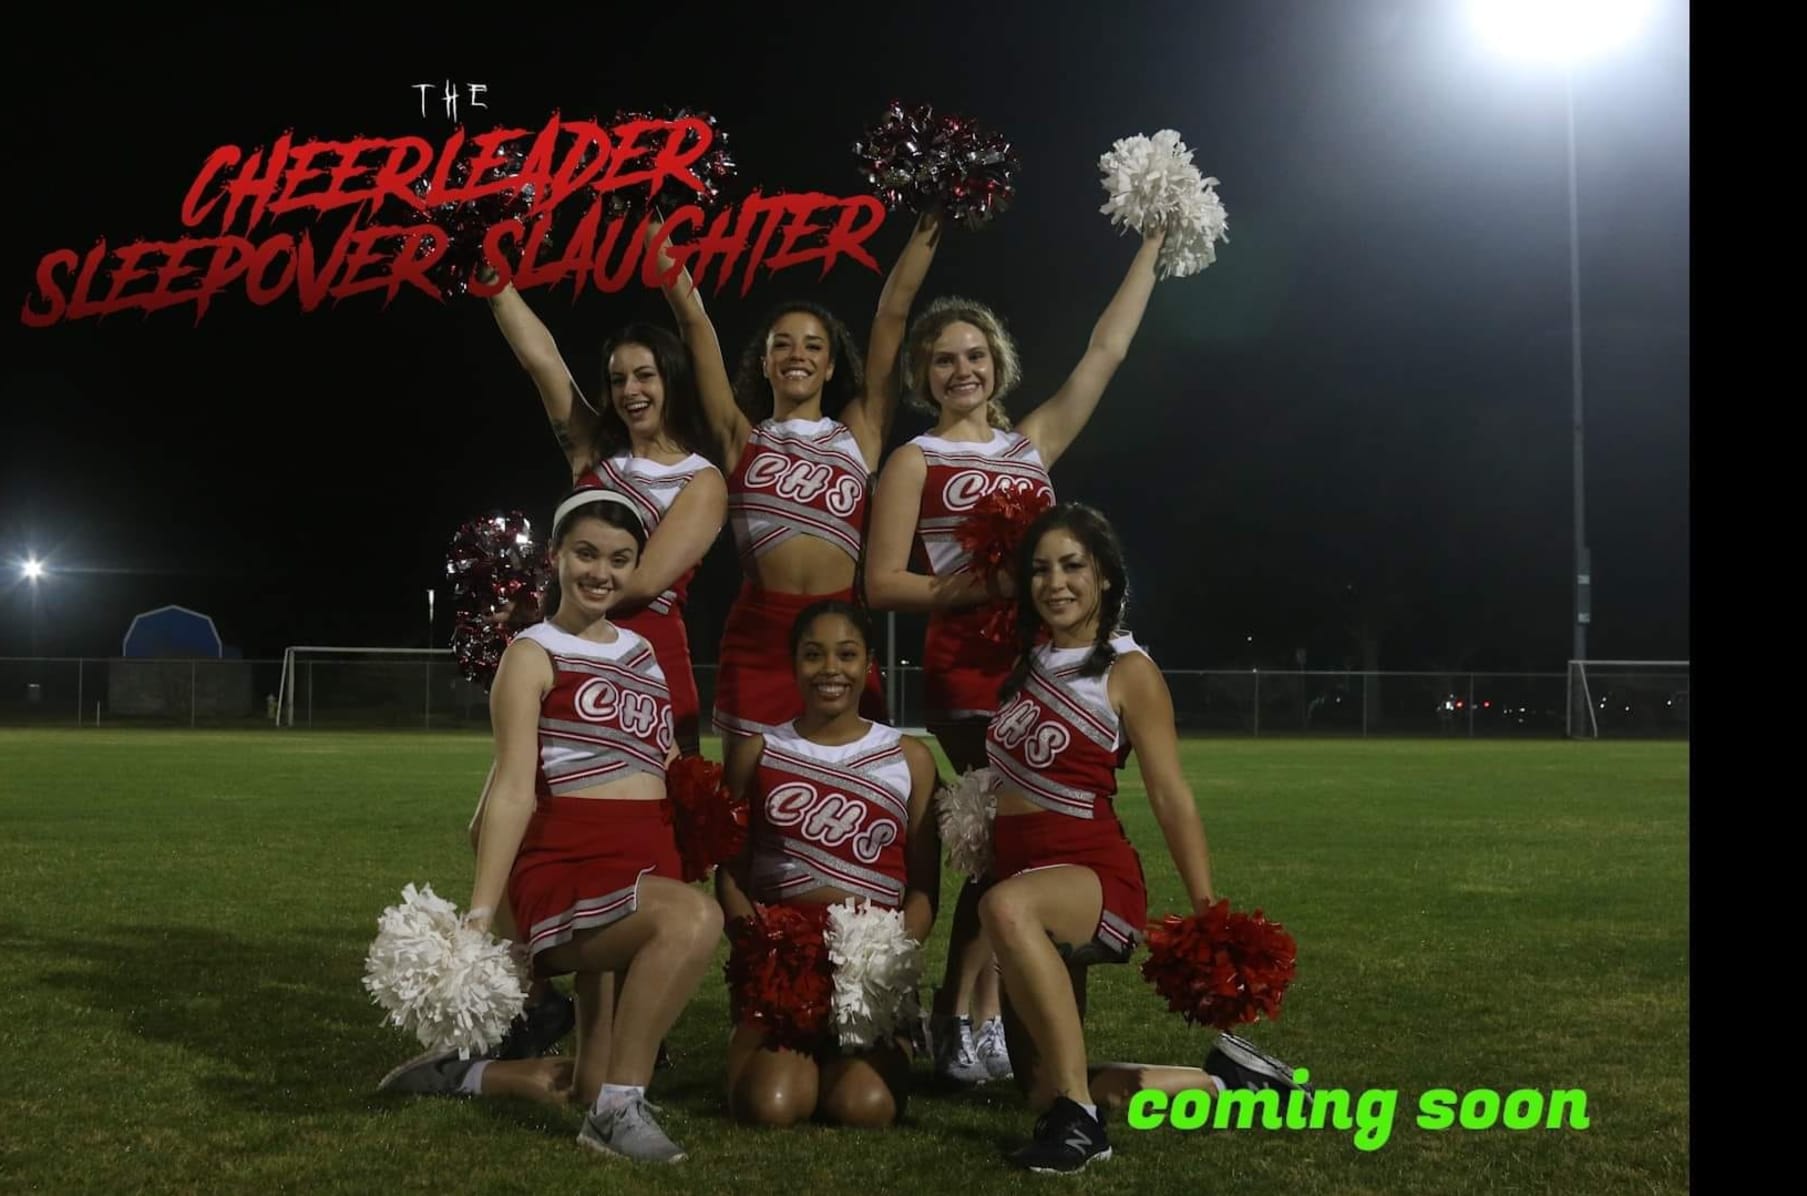 The cheerleader sleepover slaughter